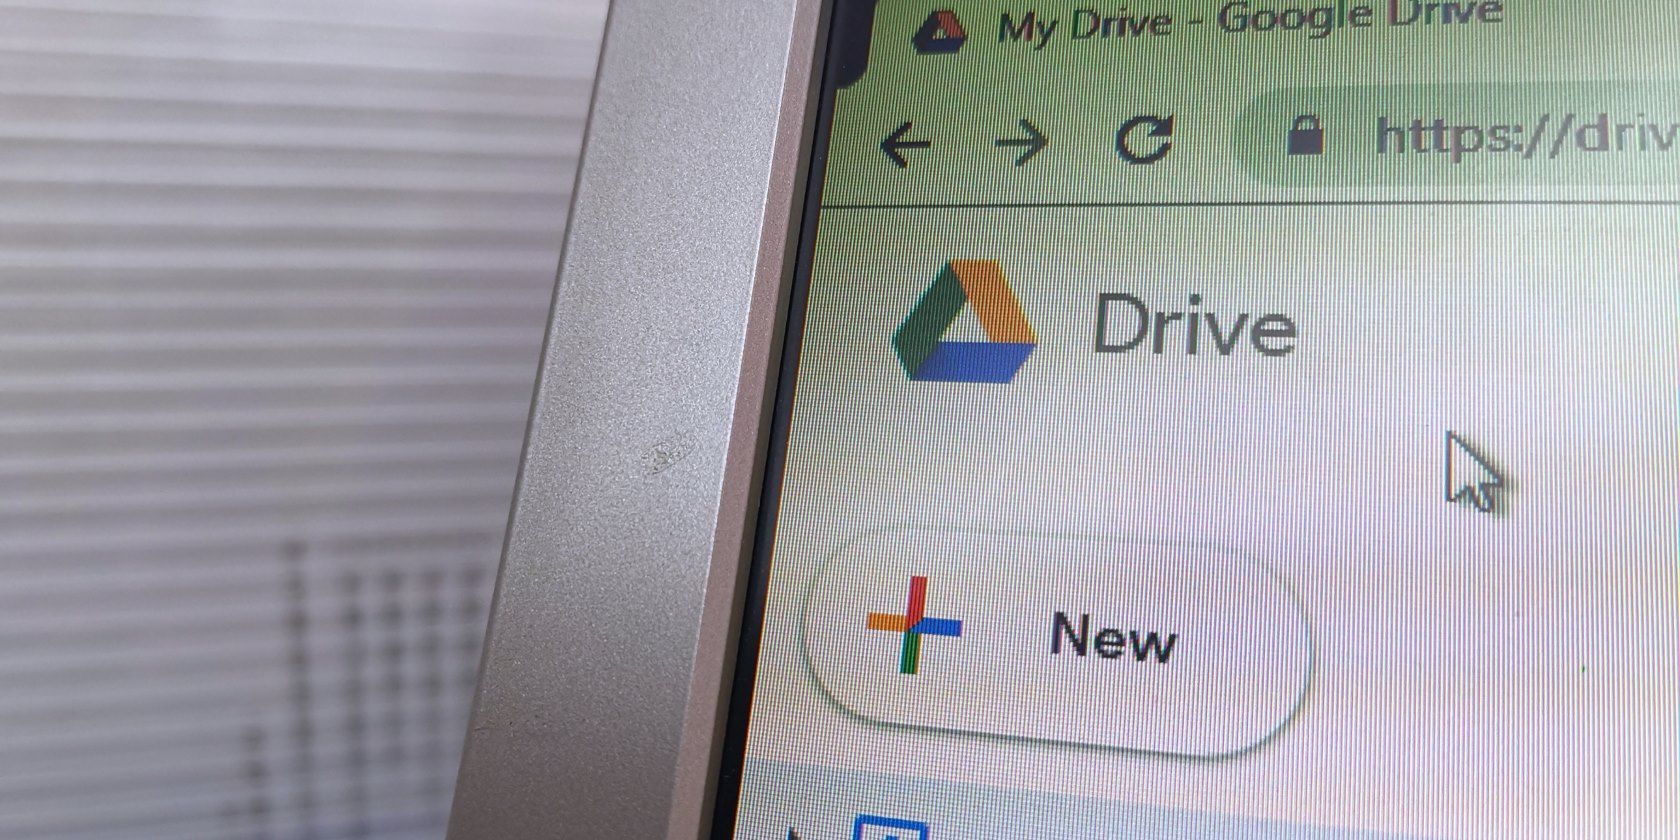 Google Drive on a laptop